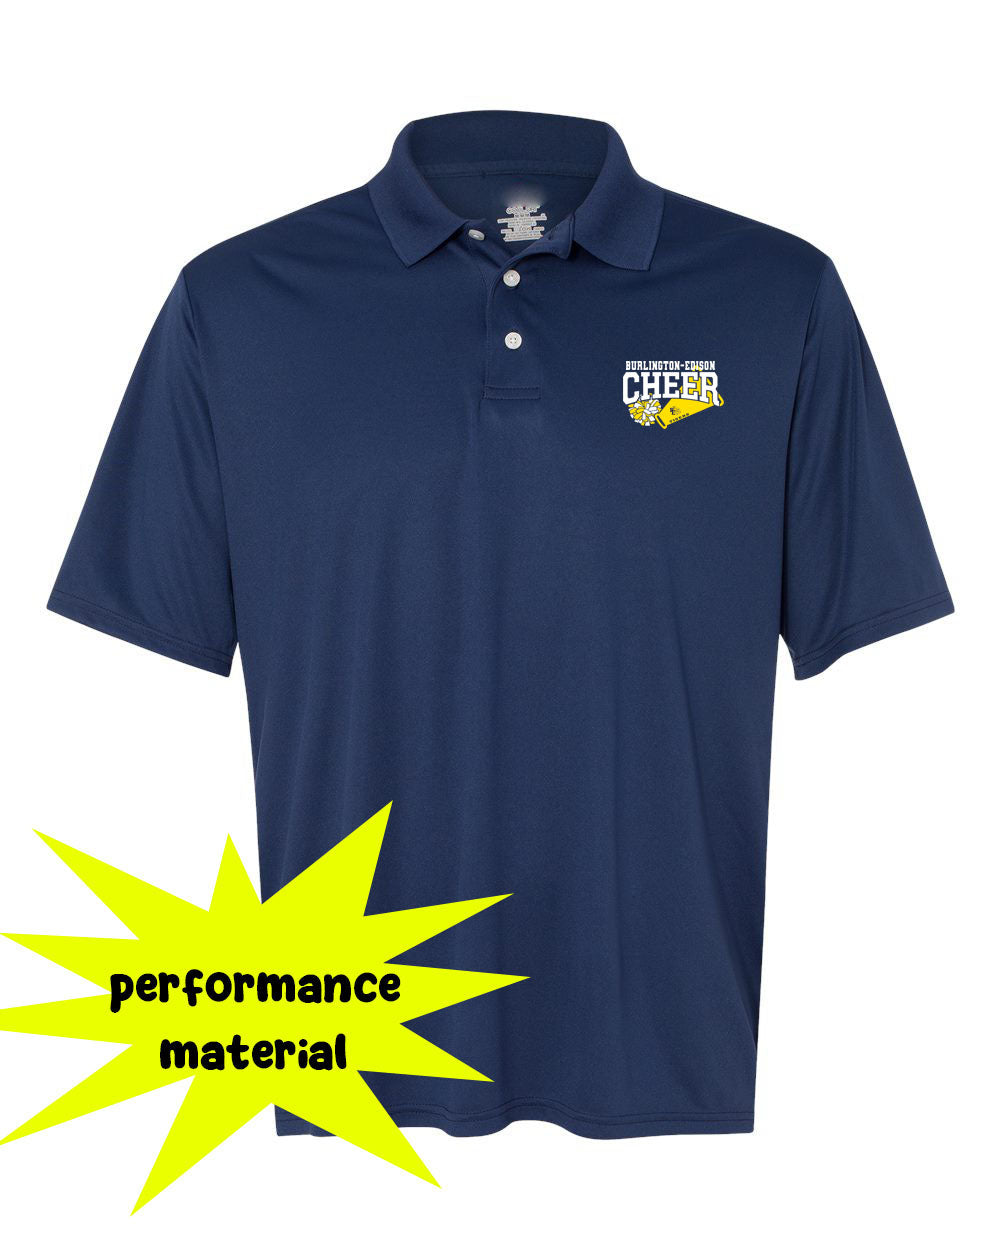 Burlington Edison Cheer Performance Material Polo T-Shirt Design 2